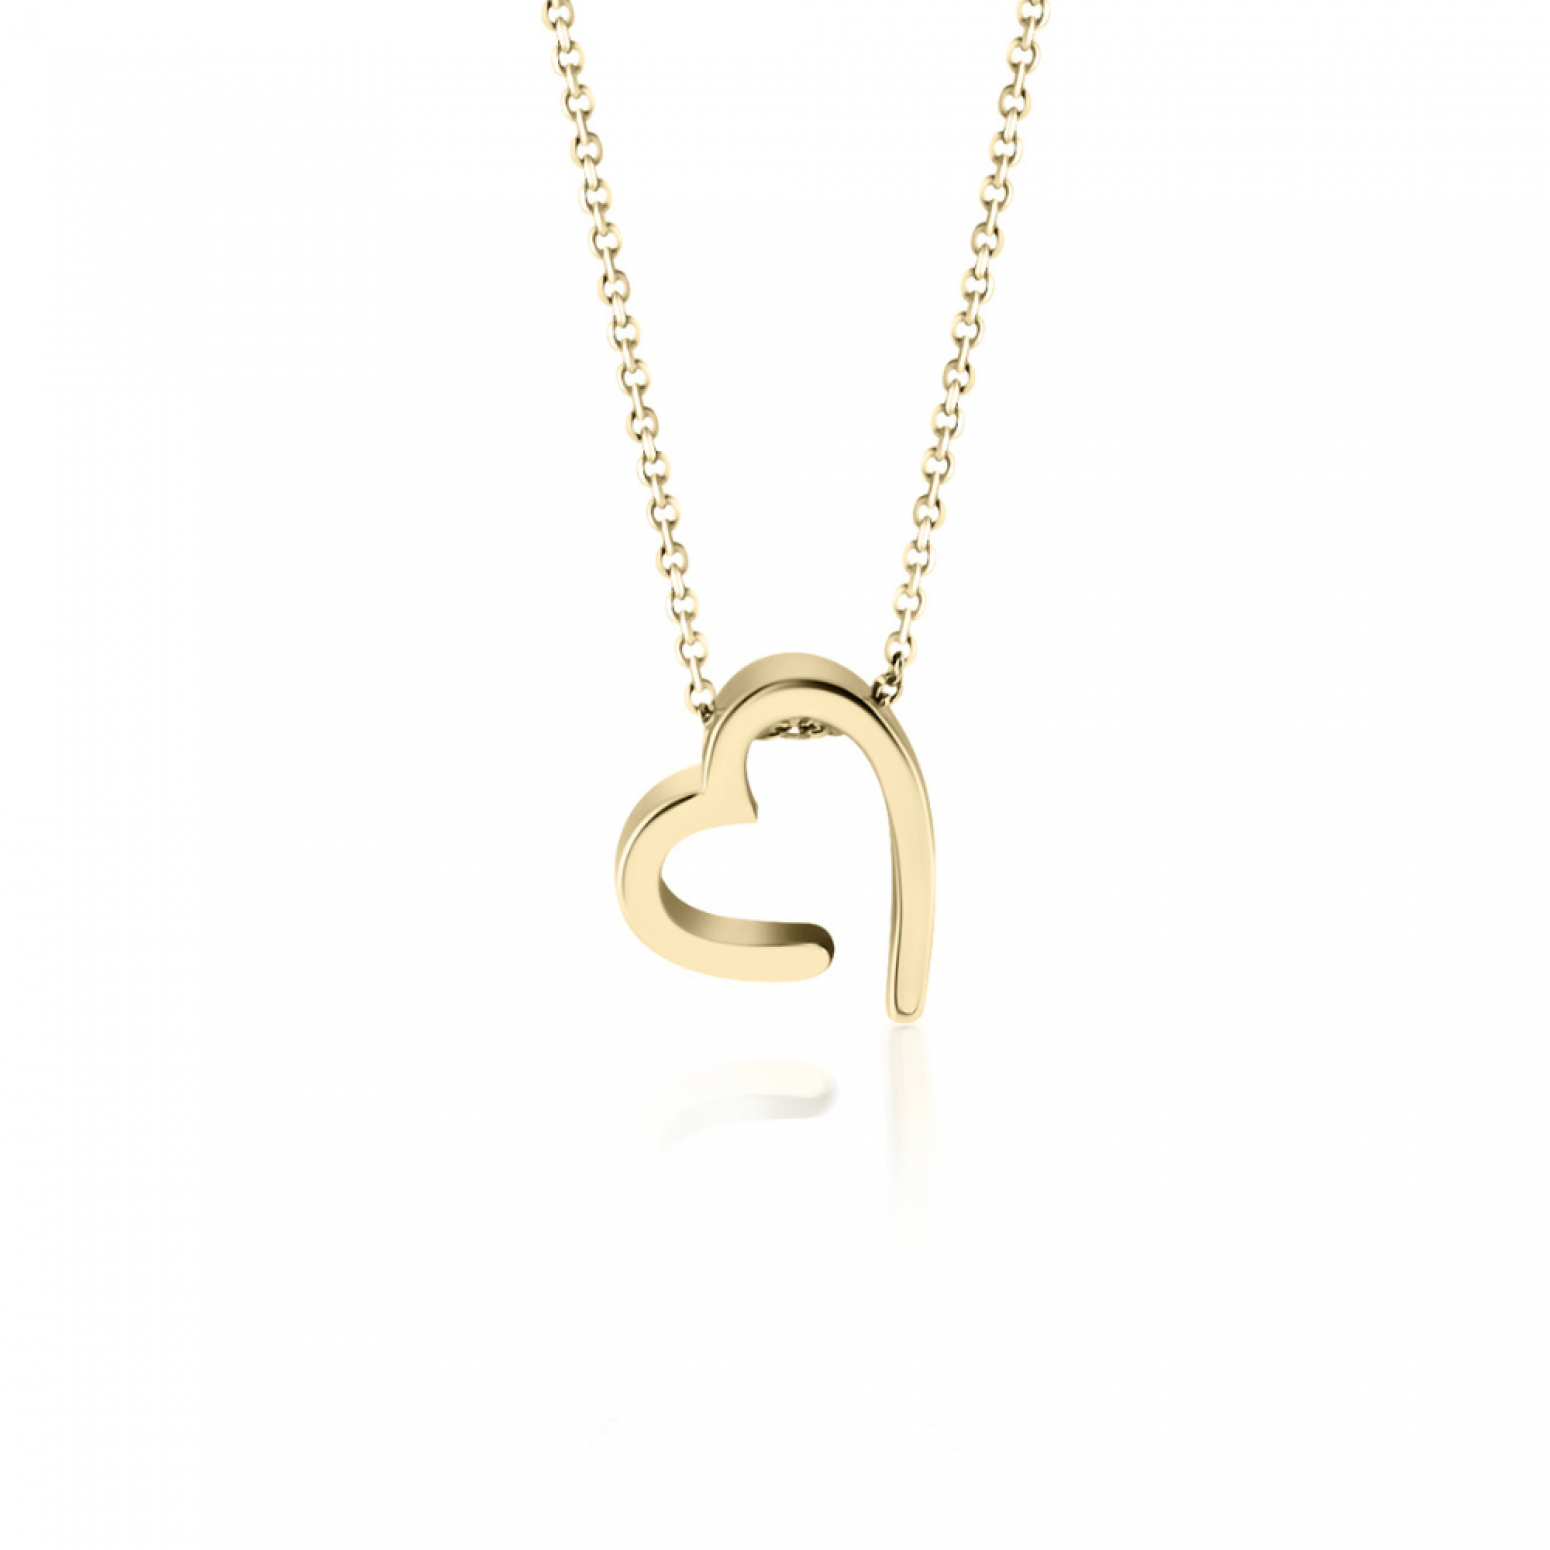 Heart necklace, Κ14 gold, ko5936 NECKLACES Κοσμηματα - chrilia.gr